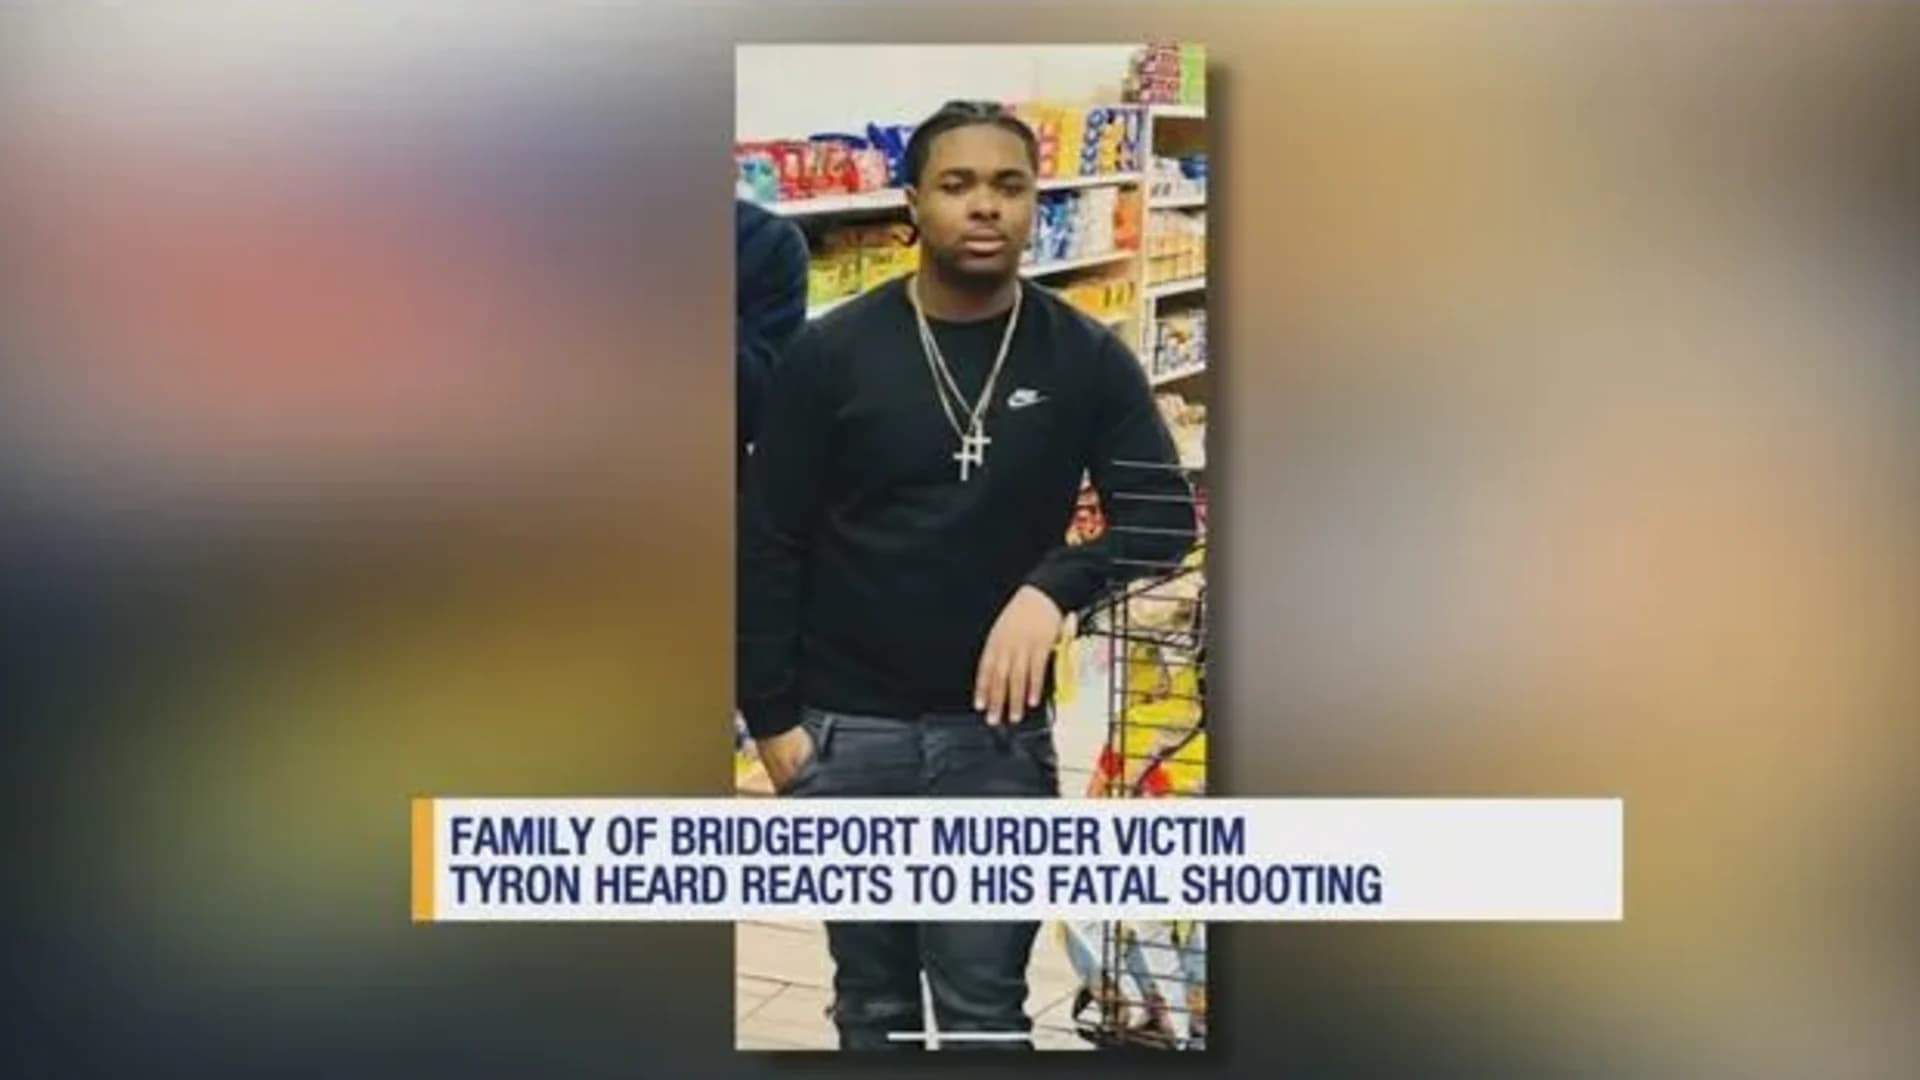 Family of Bridgeport homicide victim says he was ‘full of life’